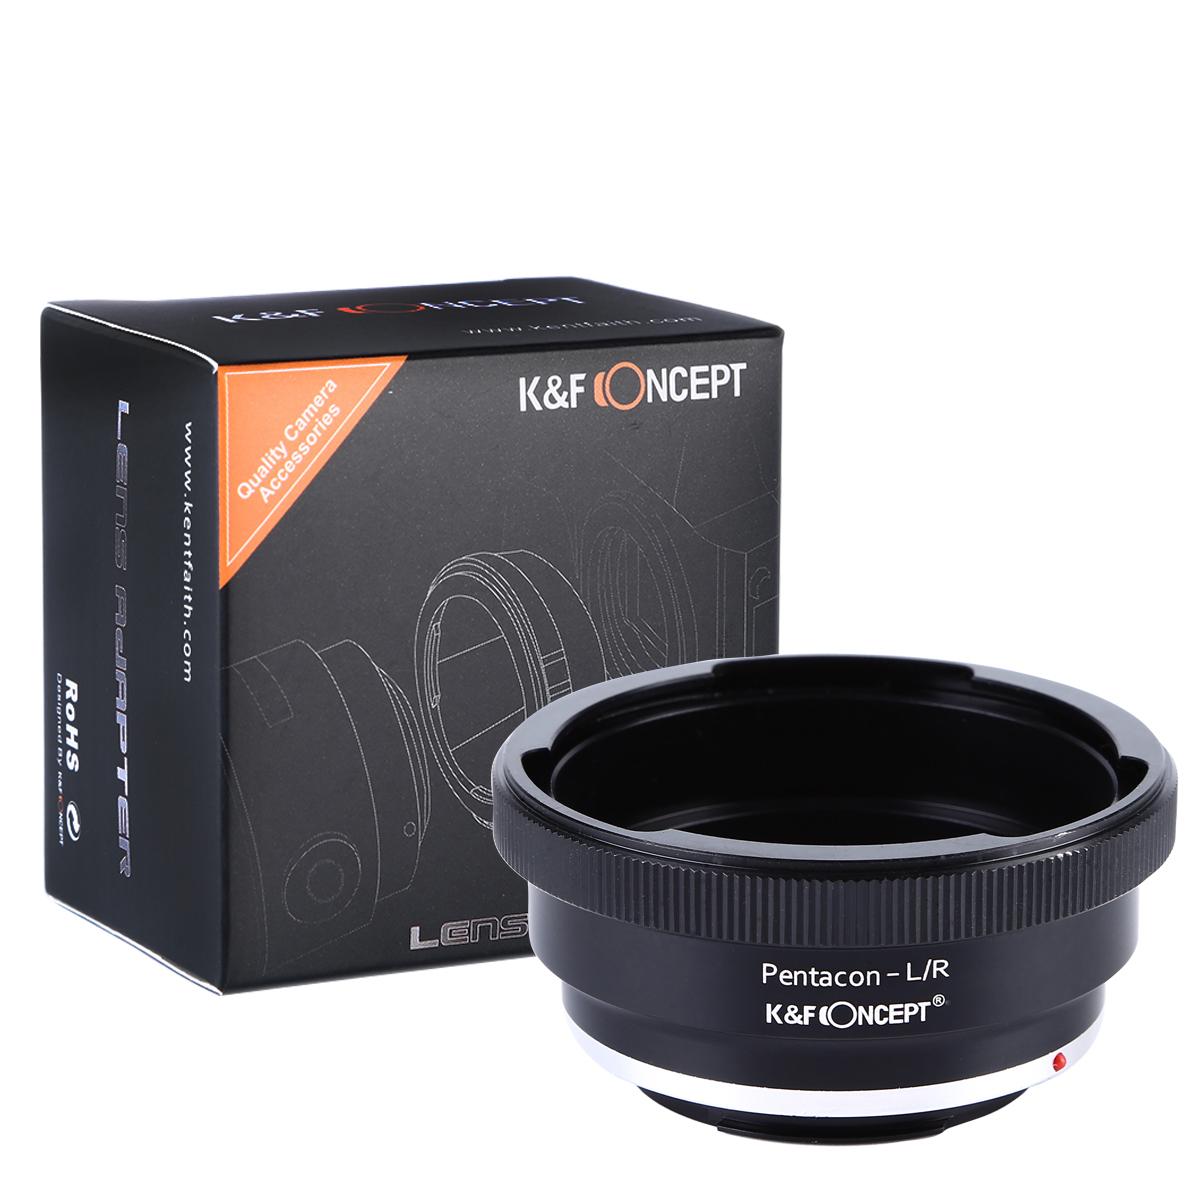 Pentacon 6 Kiev 60 Lenses to Leica R Lens Mount Adapter K&F Concept M27321 Lens Adapter